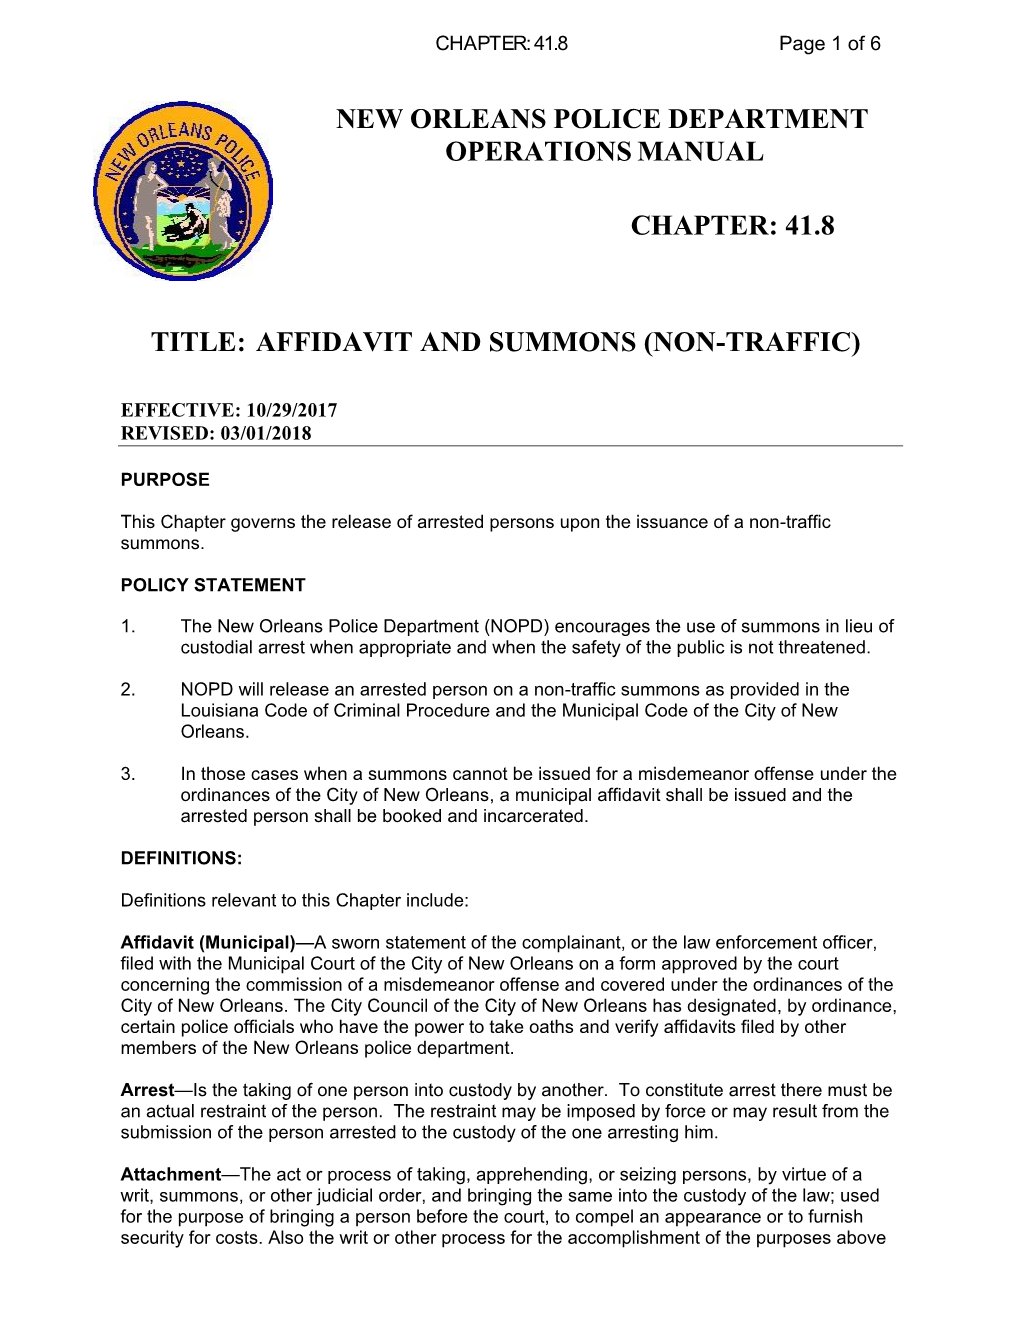 41.8 Title: Affidavit and Summons (Non-Traffic)